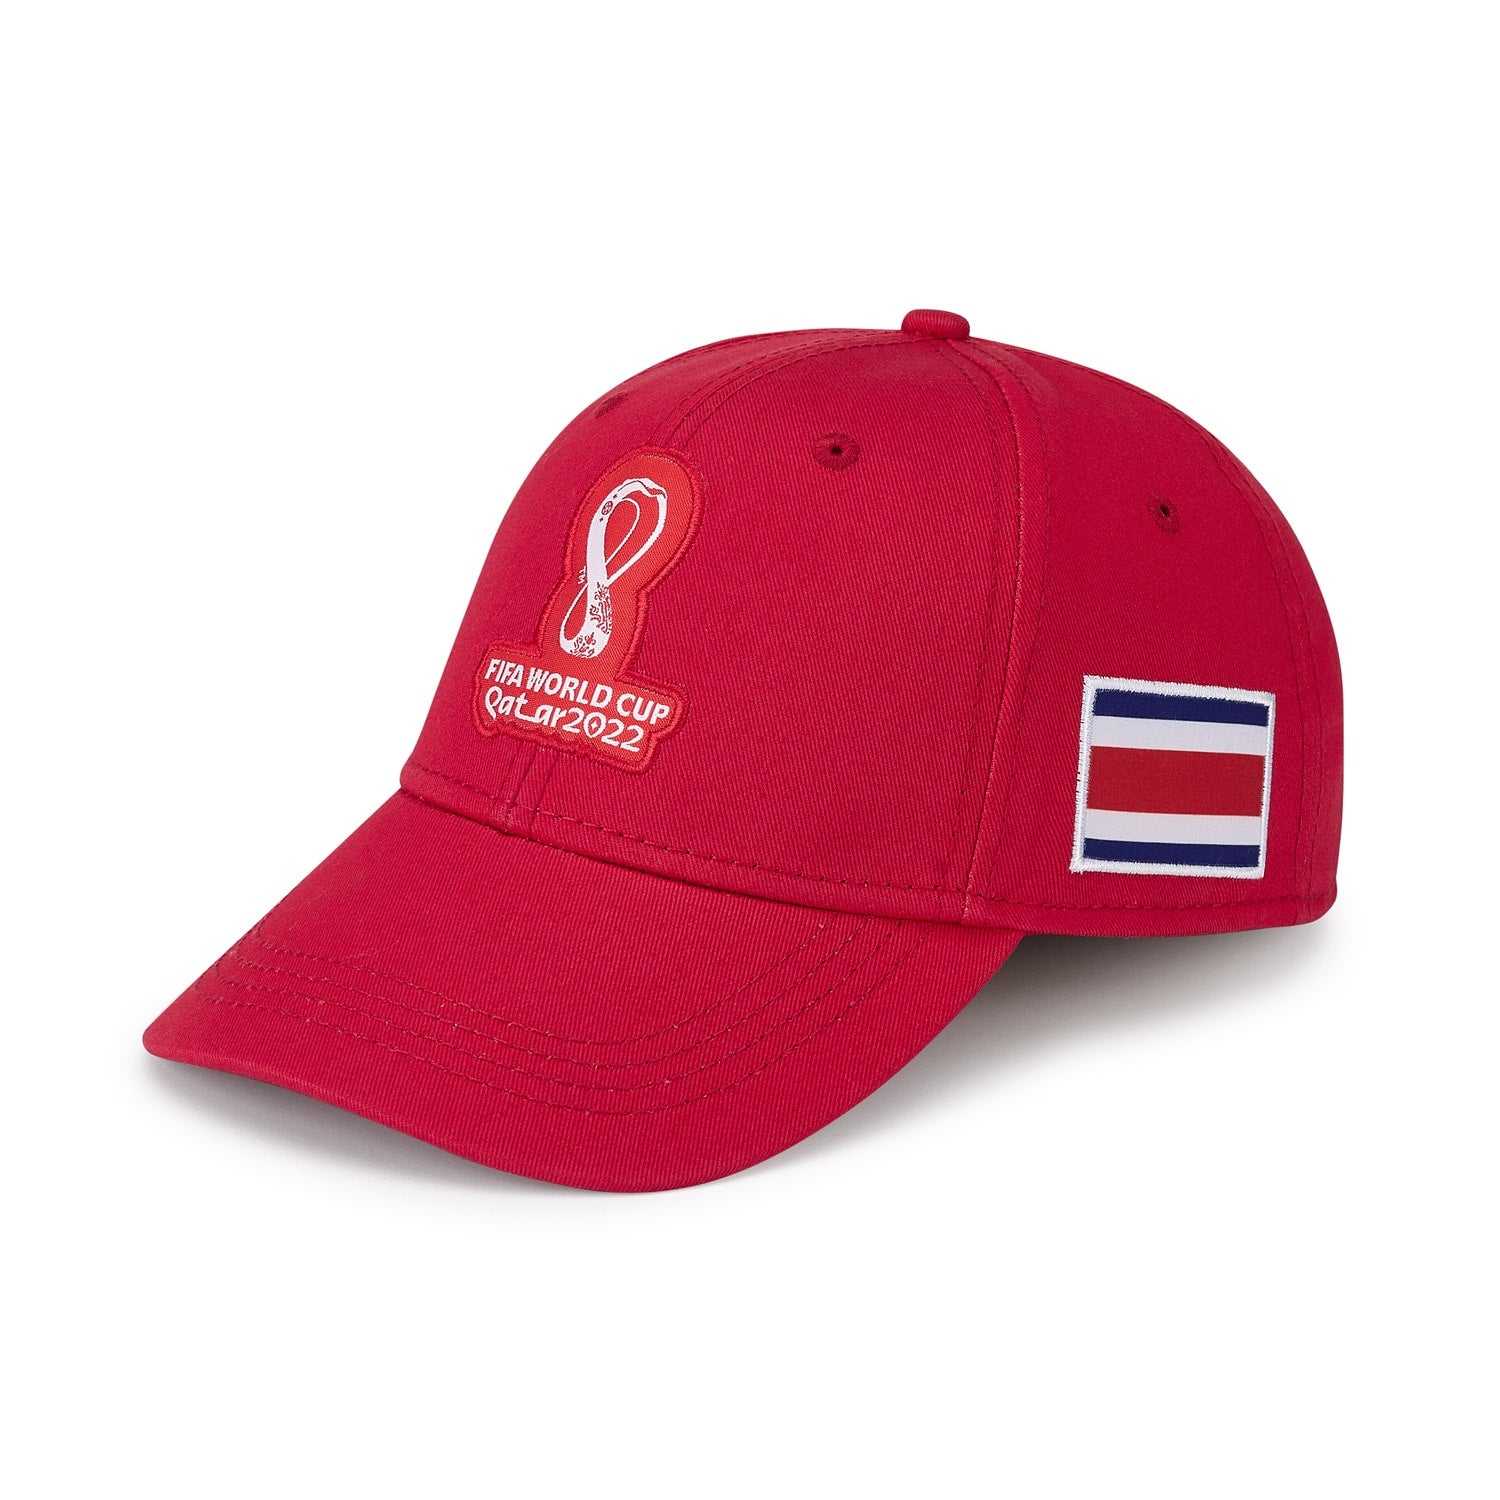 2022 World Cup Costa Rica Red Cap - Mens